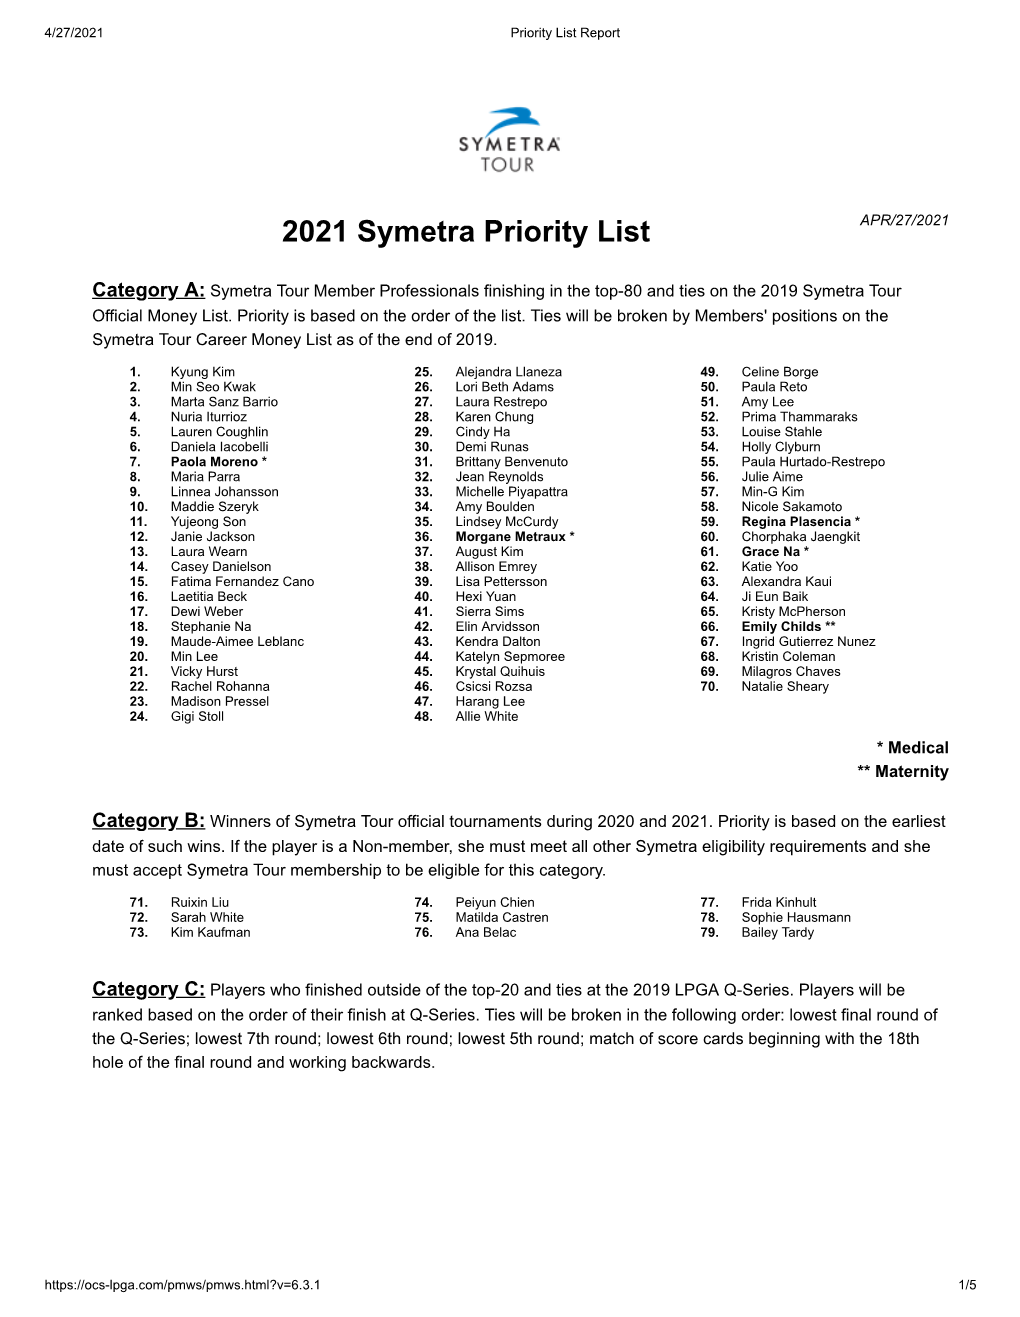 2021 Symetra Priority List APR/27/2021